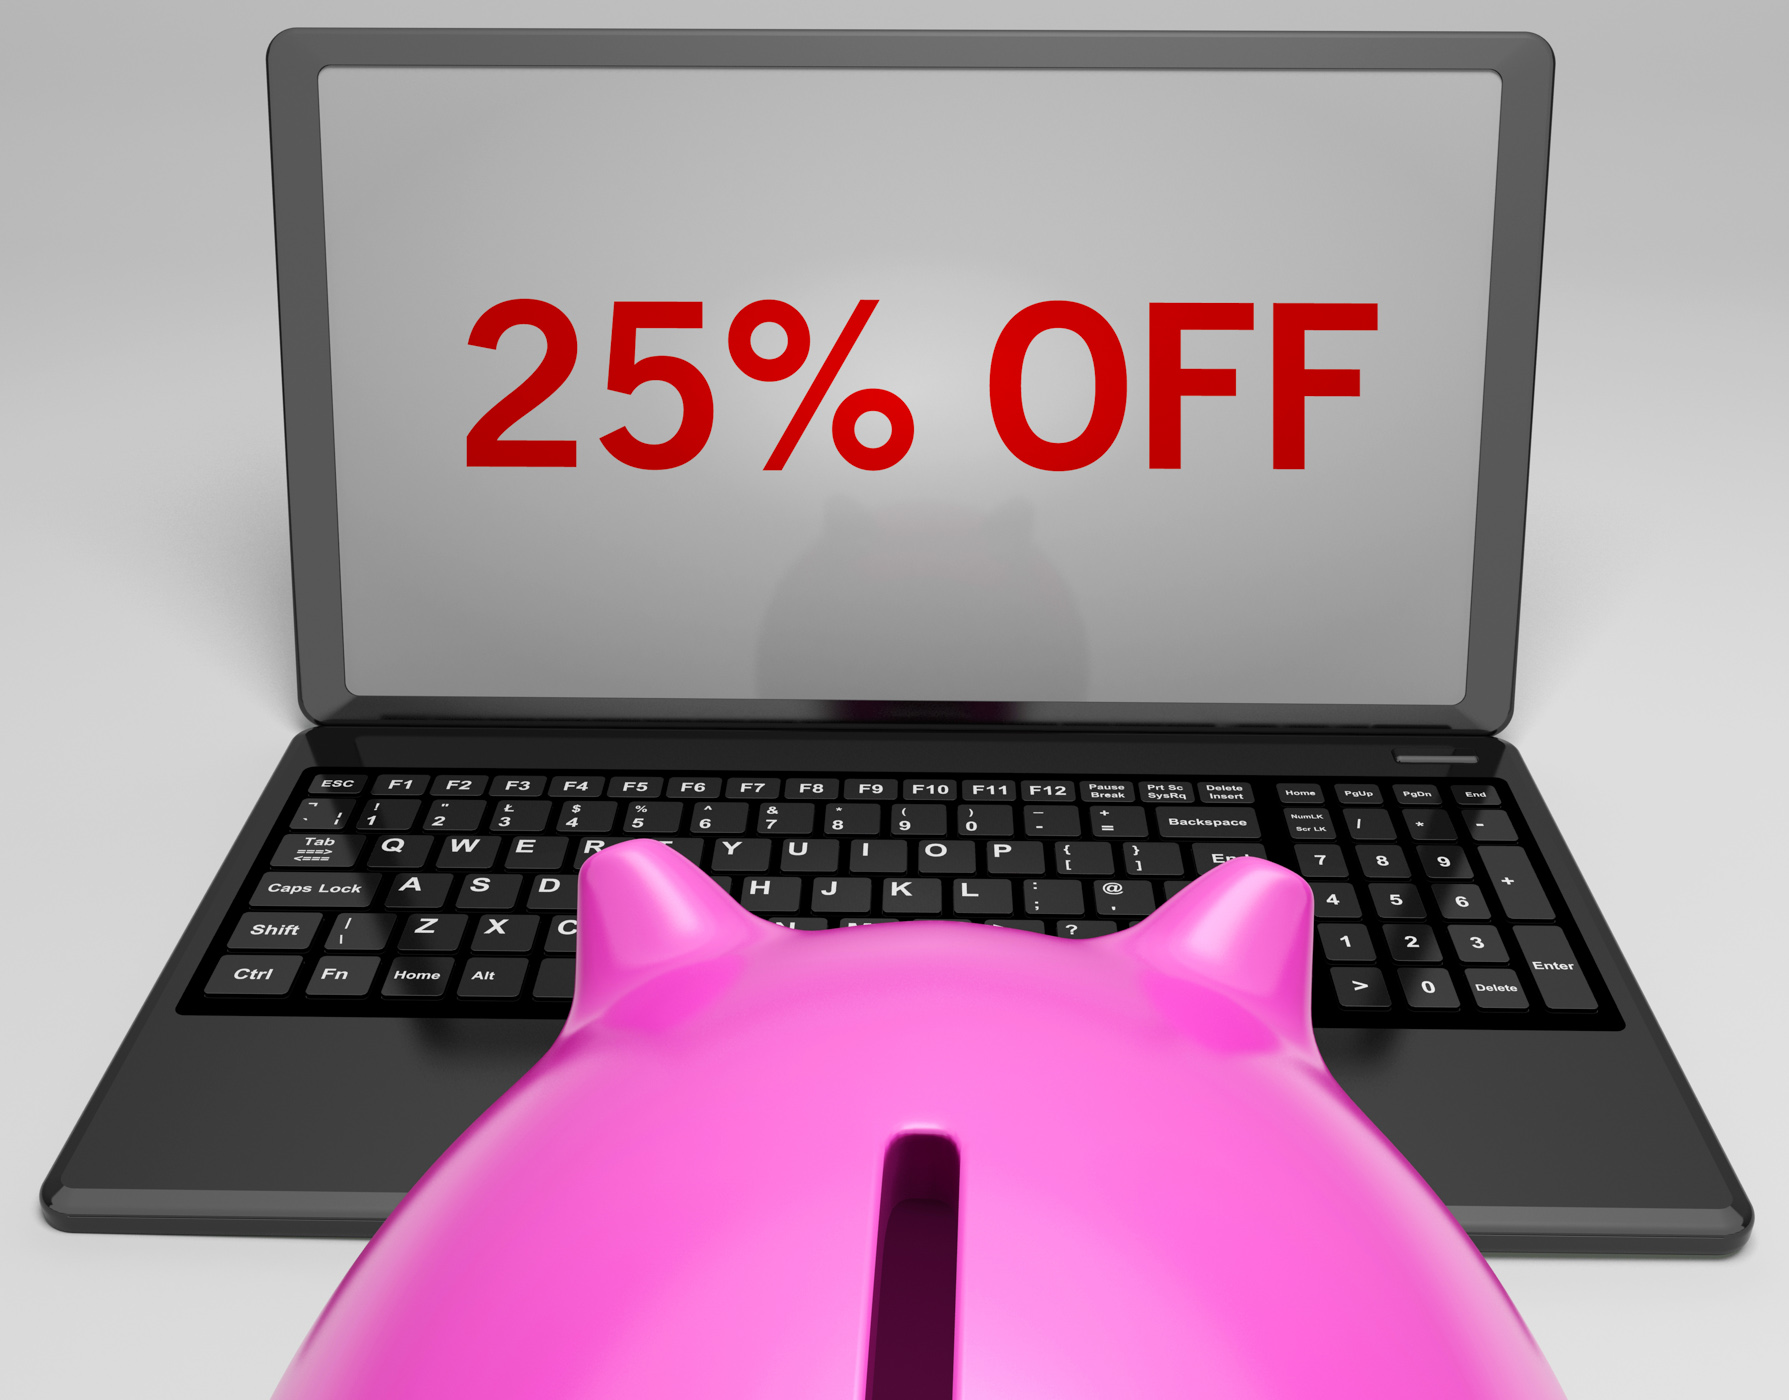 Twenty-five percent off on notebook showing online discounts photo